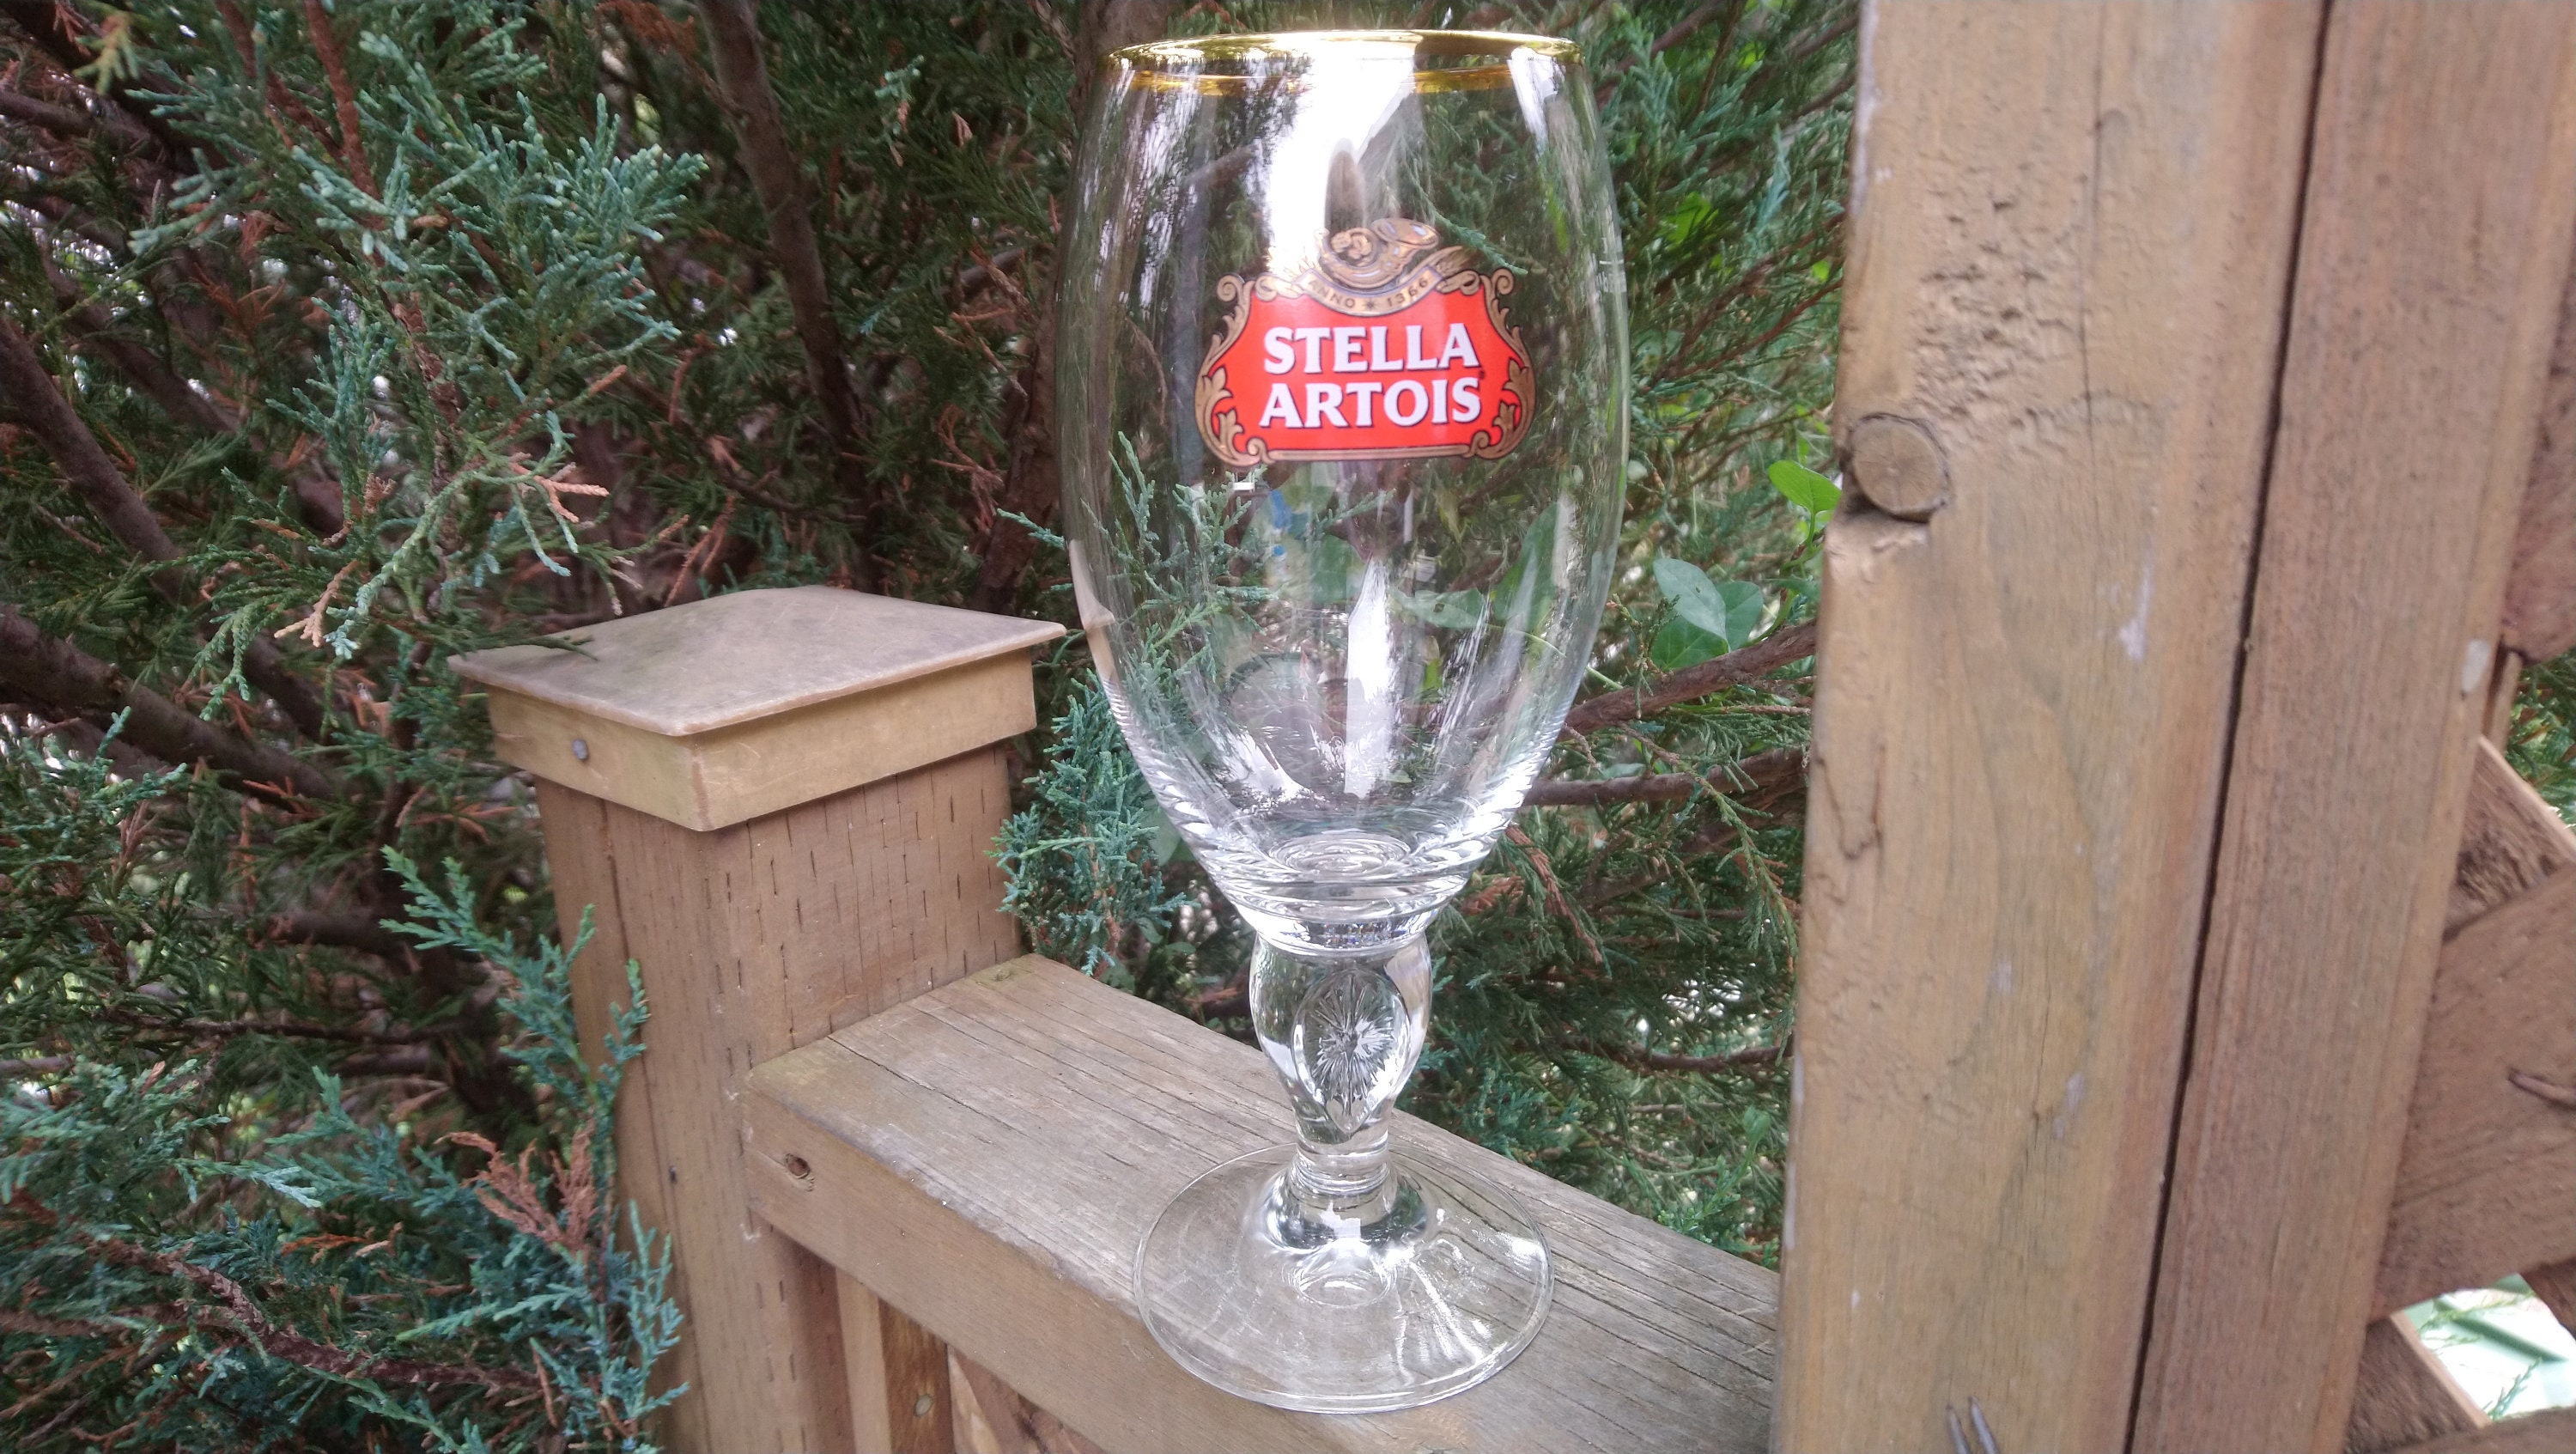 Vintage Bistro Beer Glass #stella